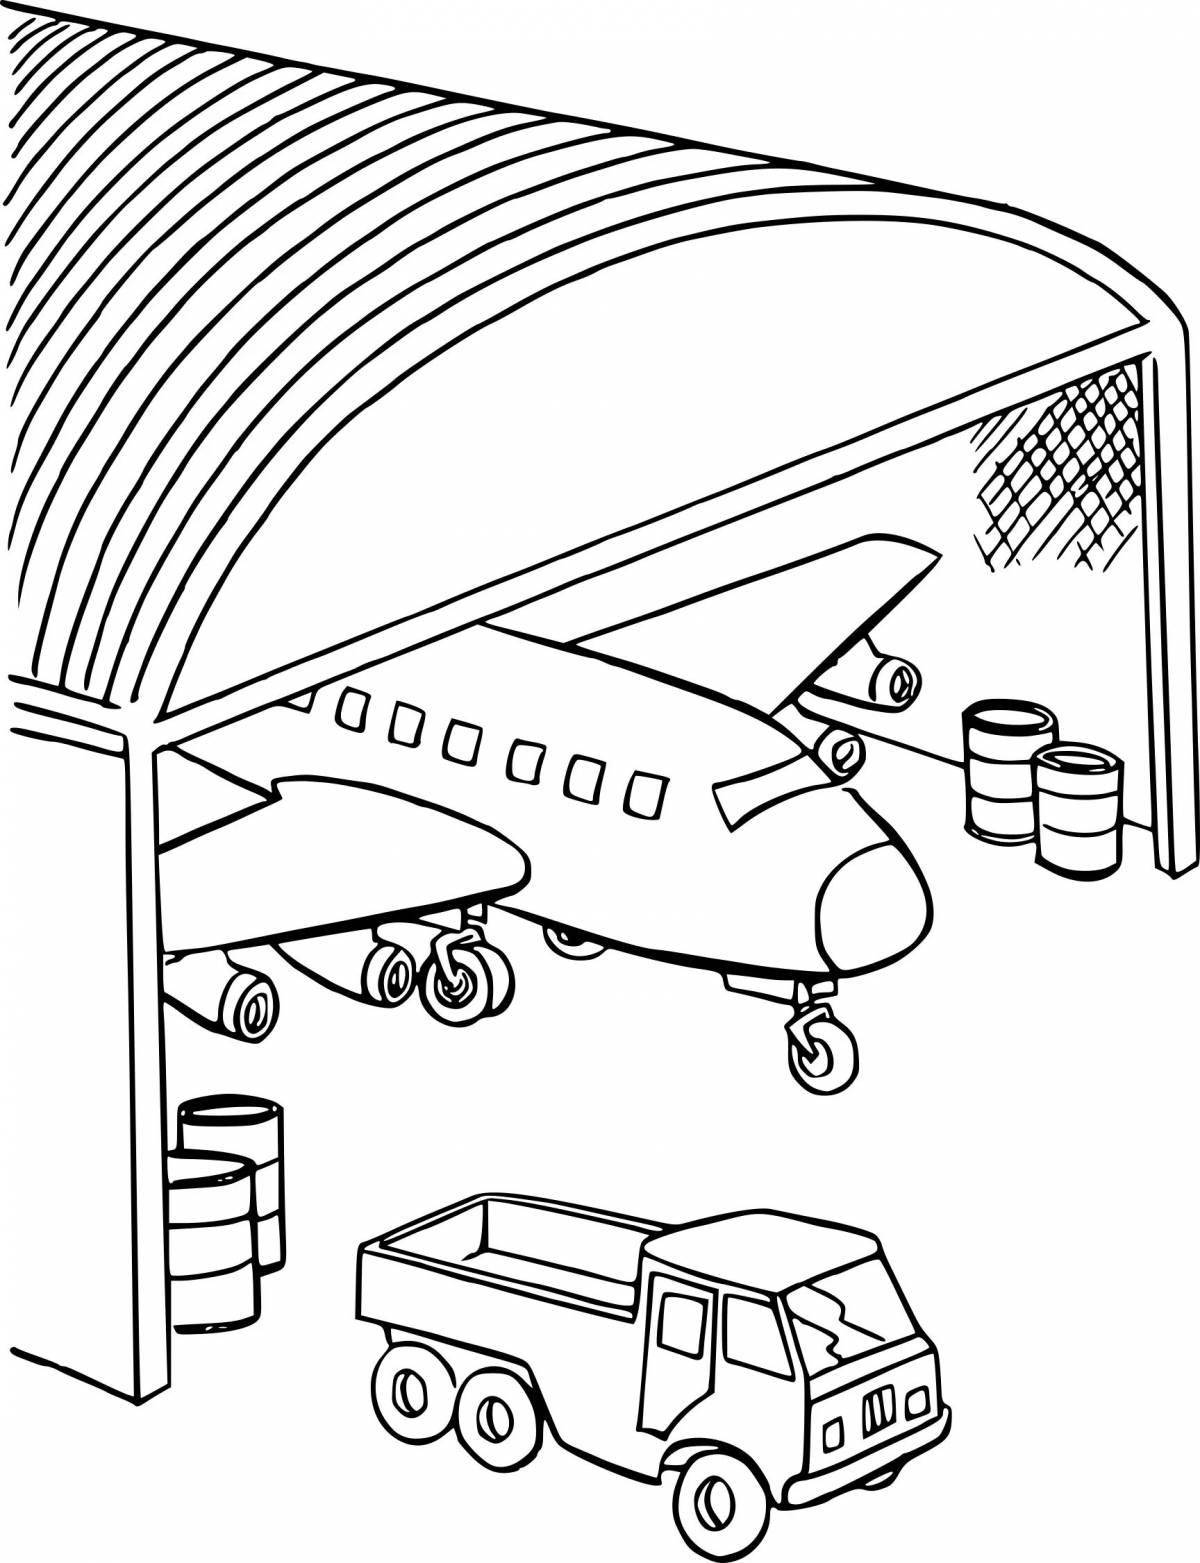 Adorable cargo plane coloring page